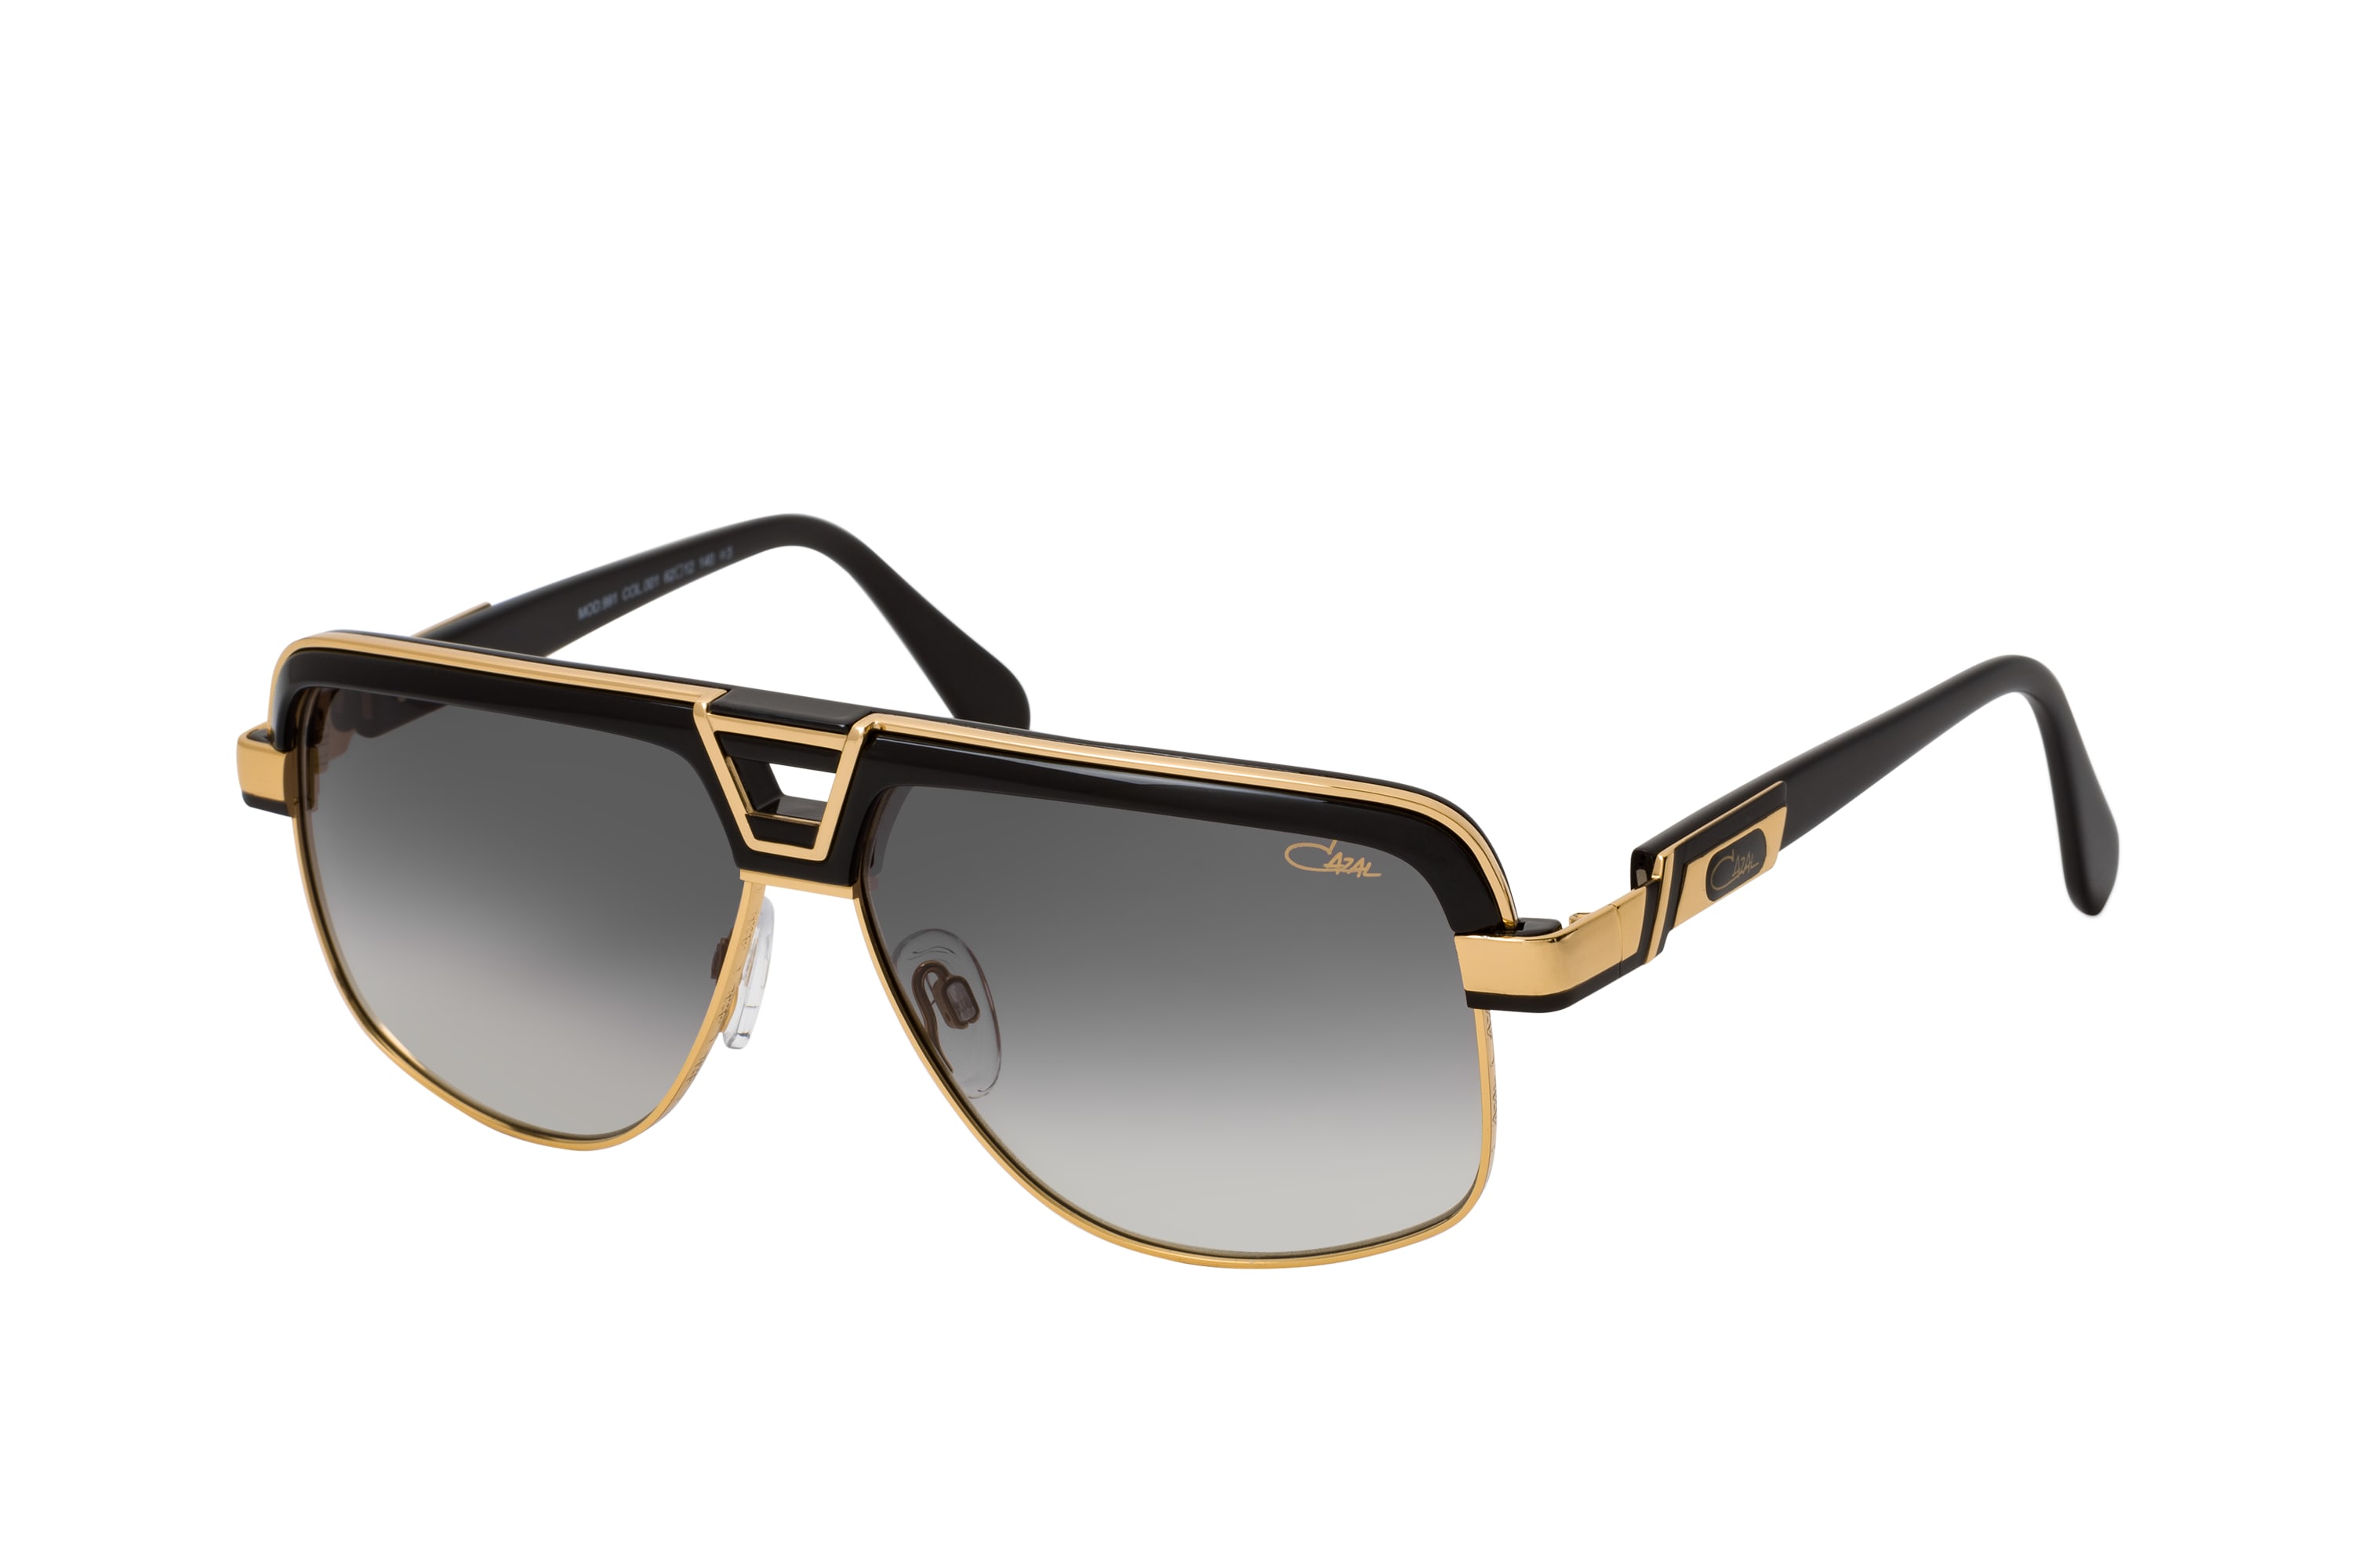 Buy Cazal 991 001 Sunglasses